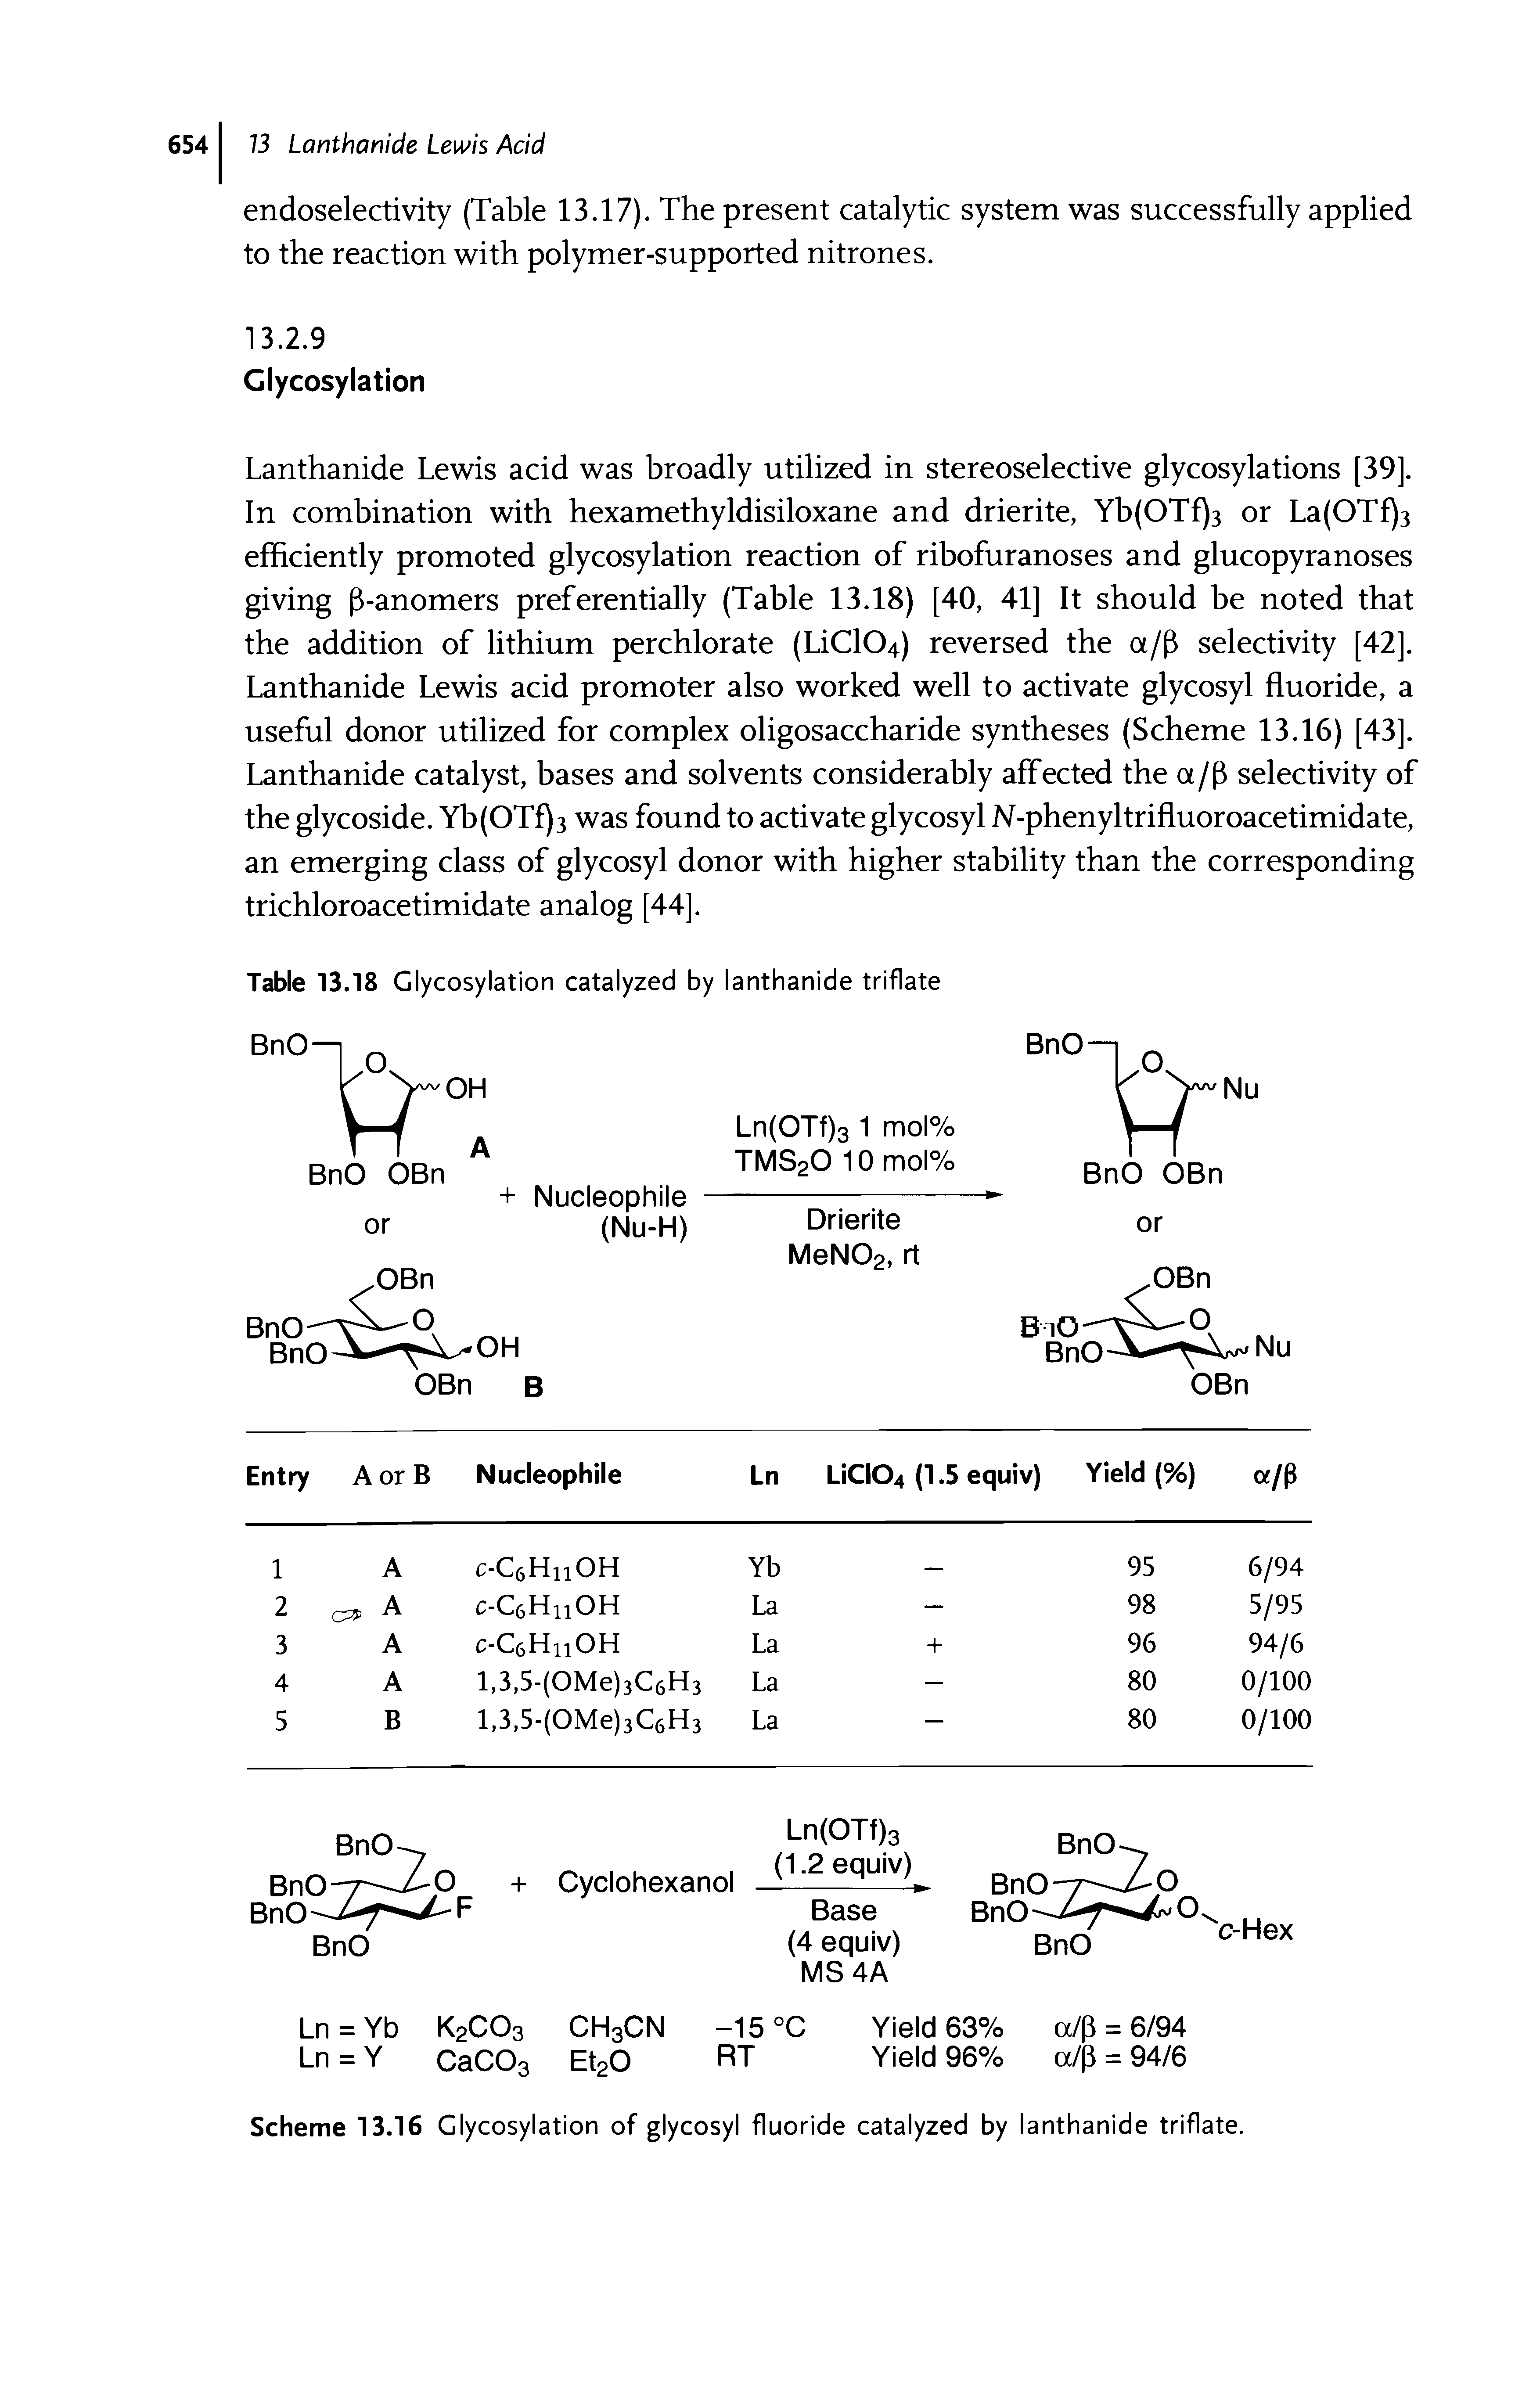 Scheme 13.16 Glycosylation of glycosyl fluoride catalyzed by lanthanide triflate.